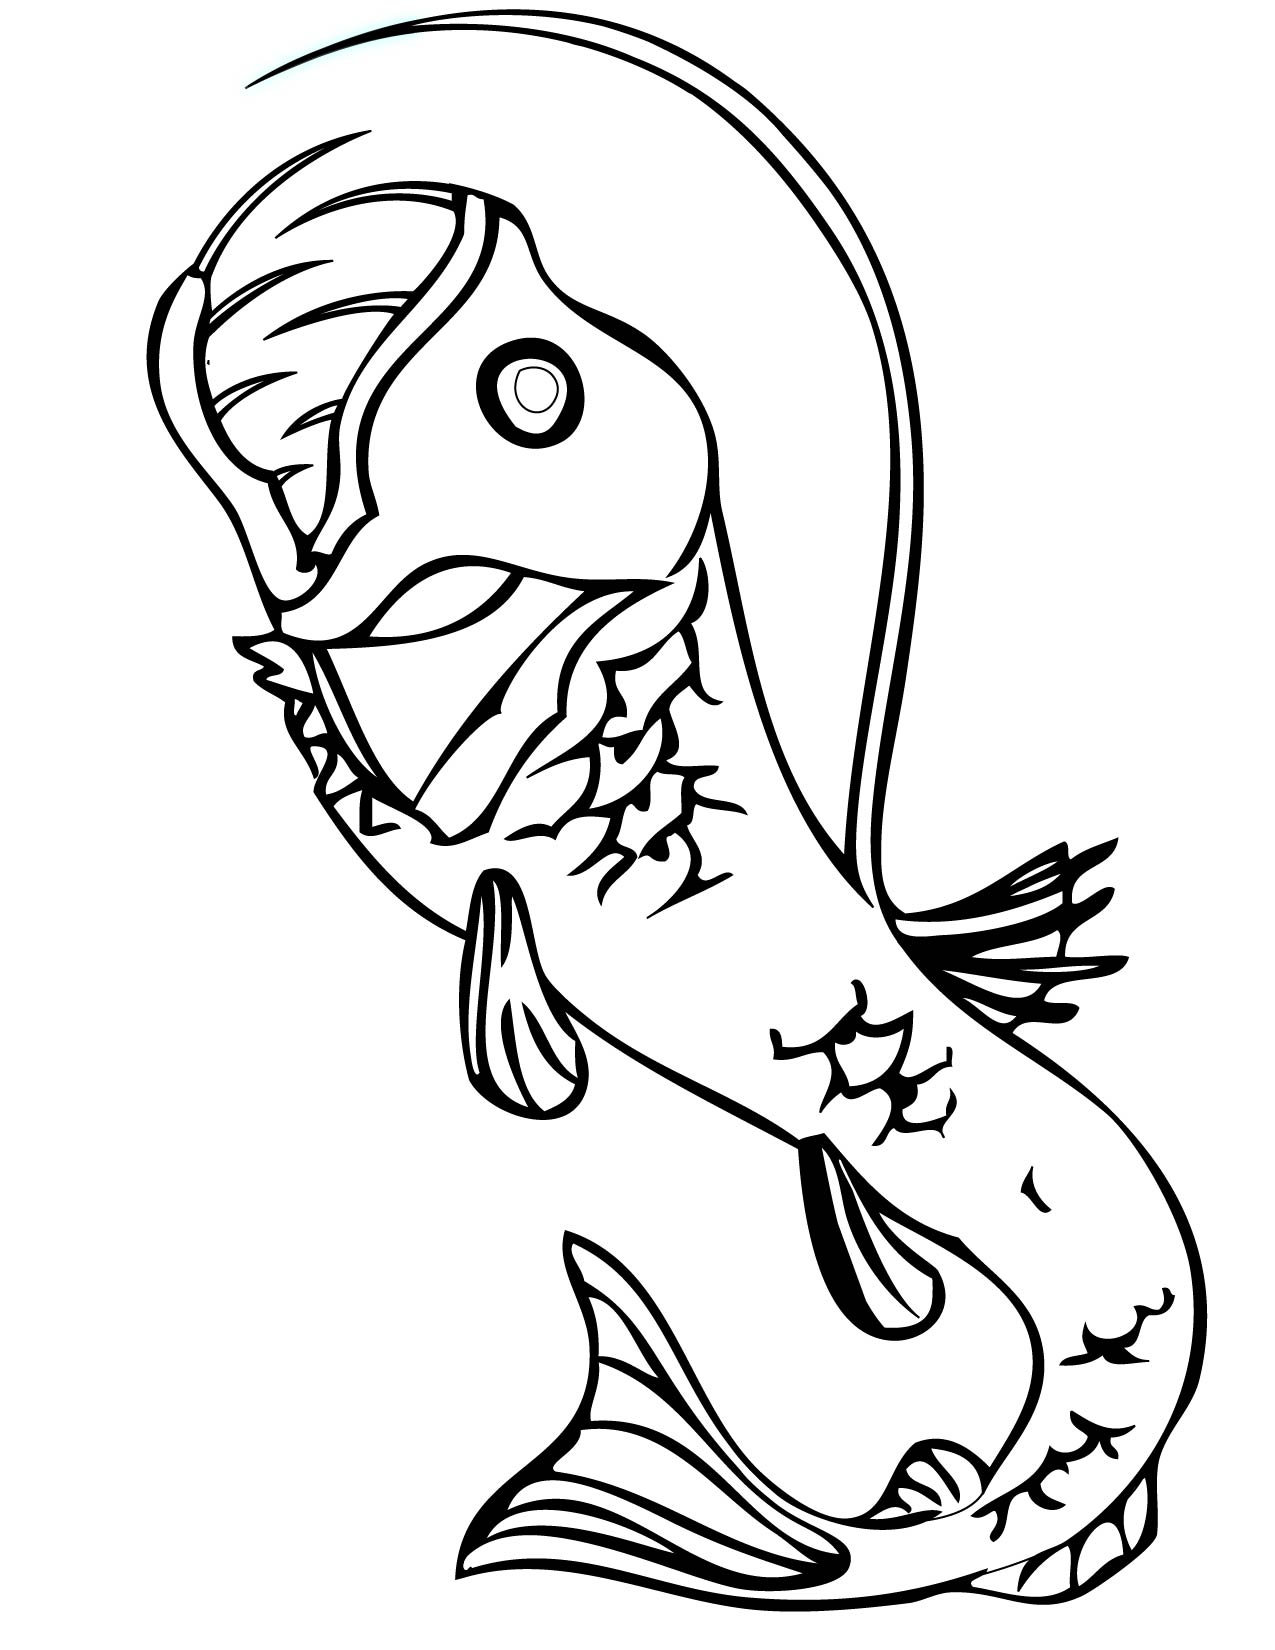 Free Koi Fish Coloring Page, Download Free Koi Fish Coloring Page png